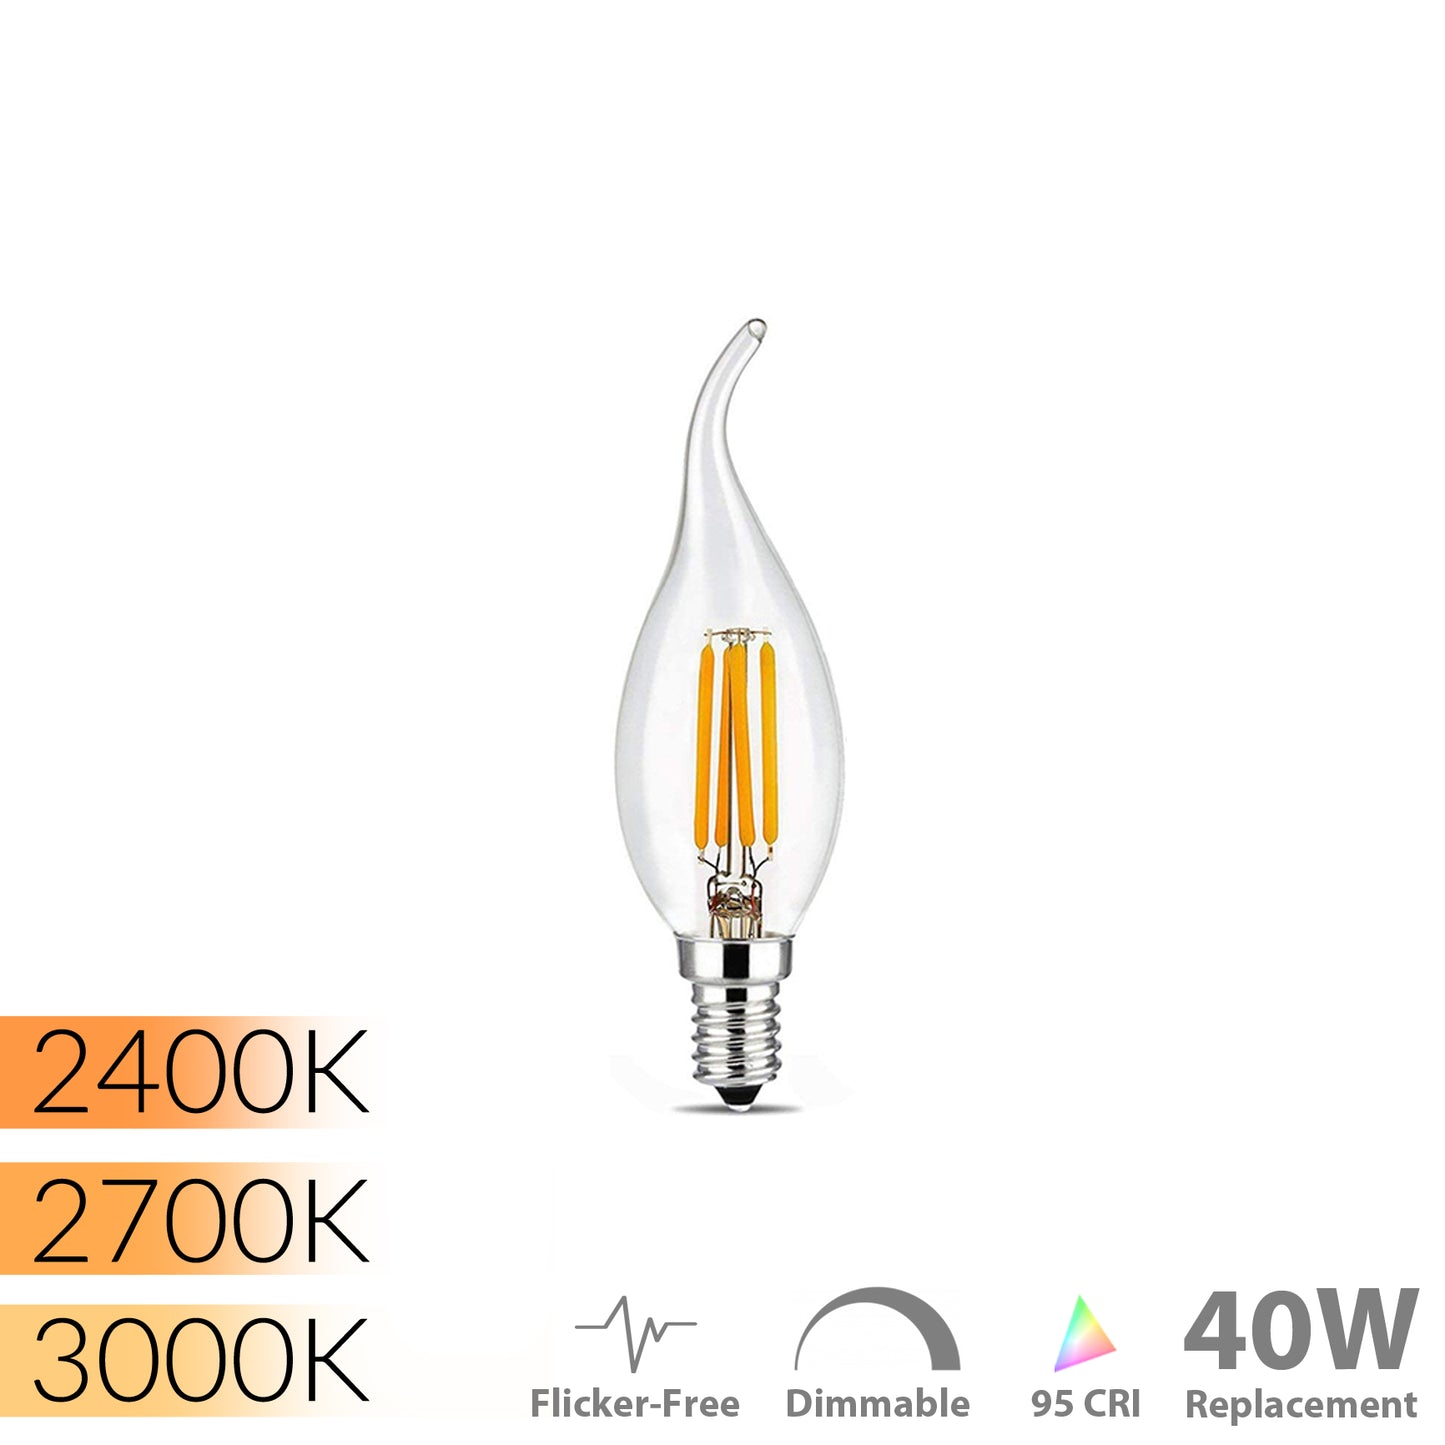 ModernVintage™ 95 CRI Candelabra LED Filament Bulb for Home & Residential